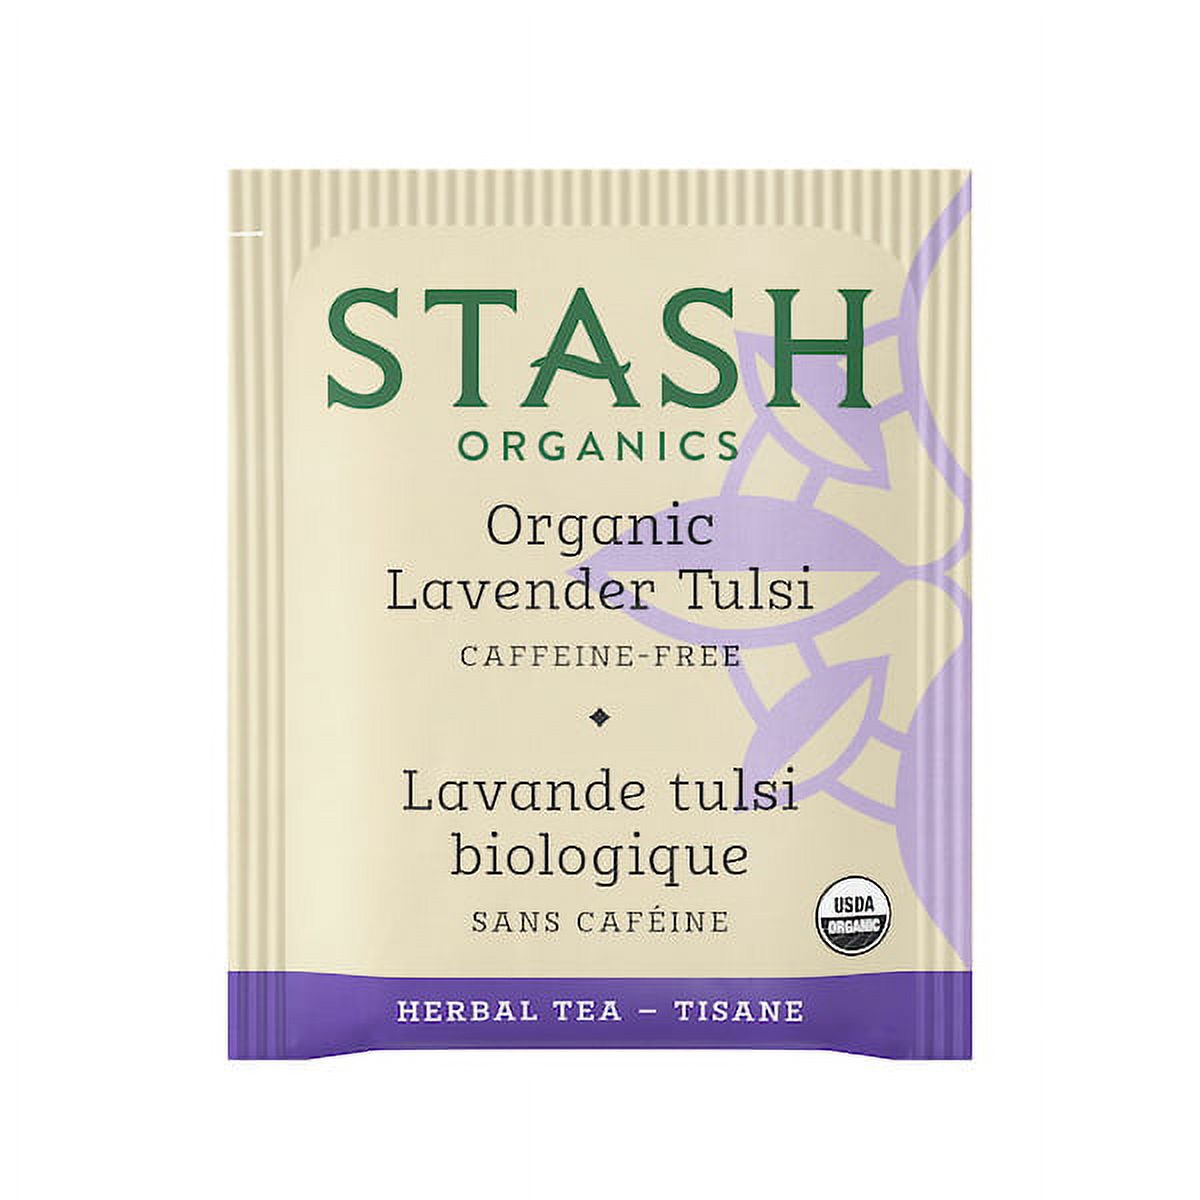 Stash Tea Organic Lavender Tulsi Herbal Tea Bags, 18 Count - image 2 of 4